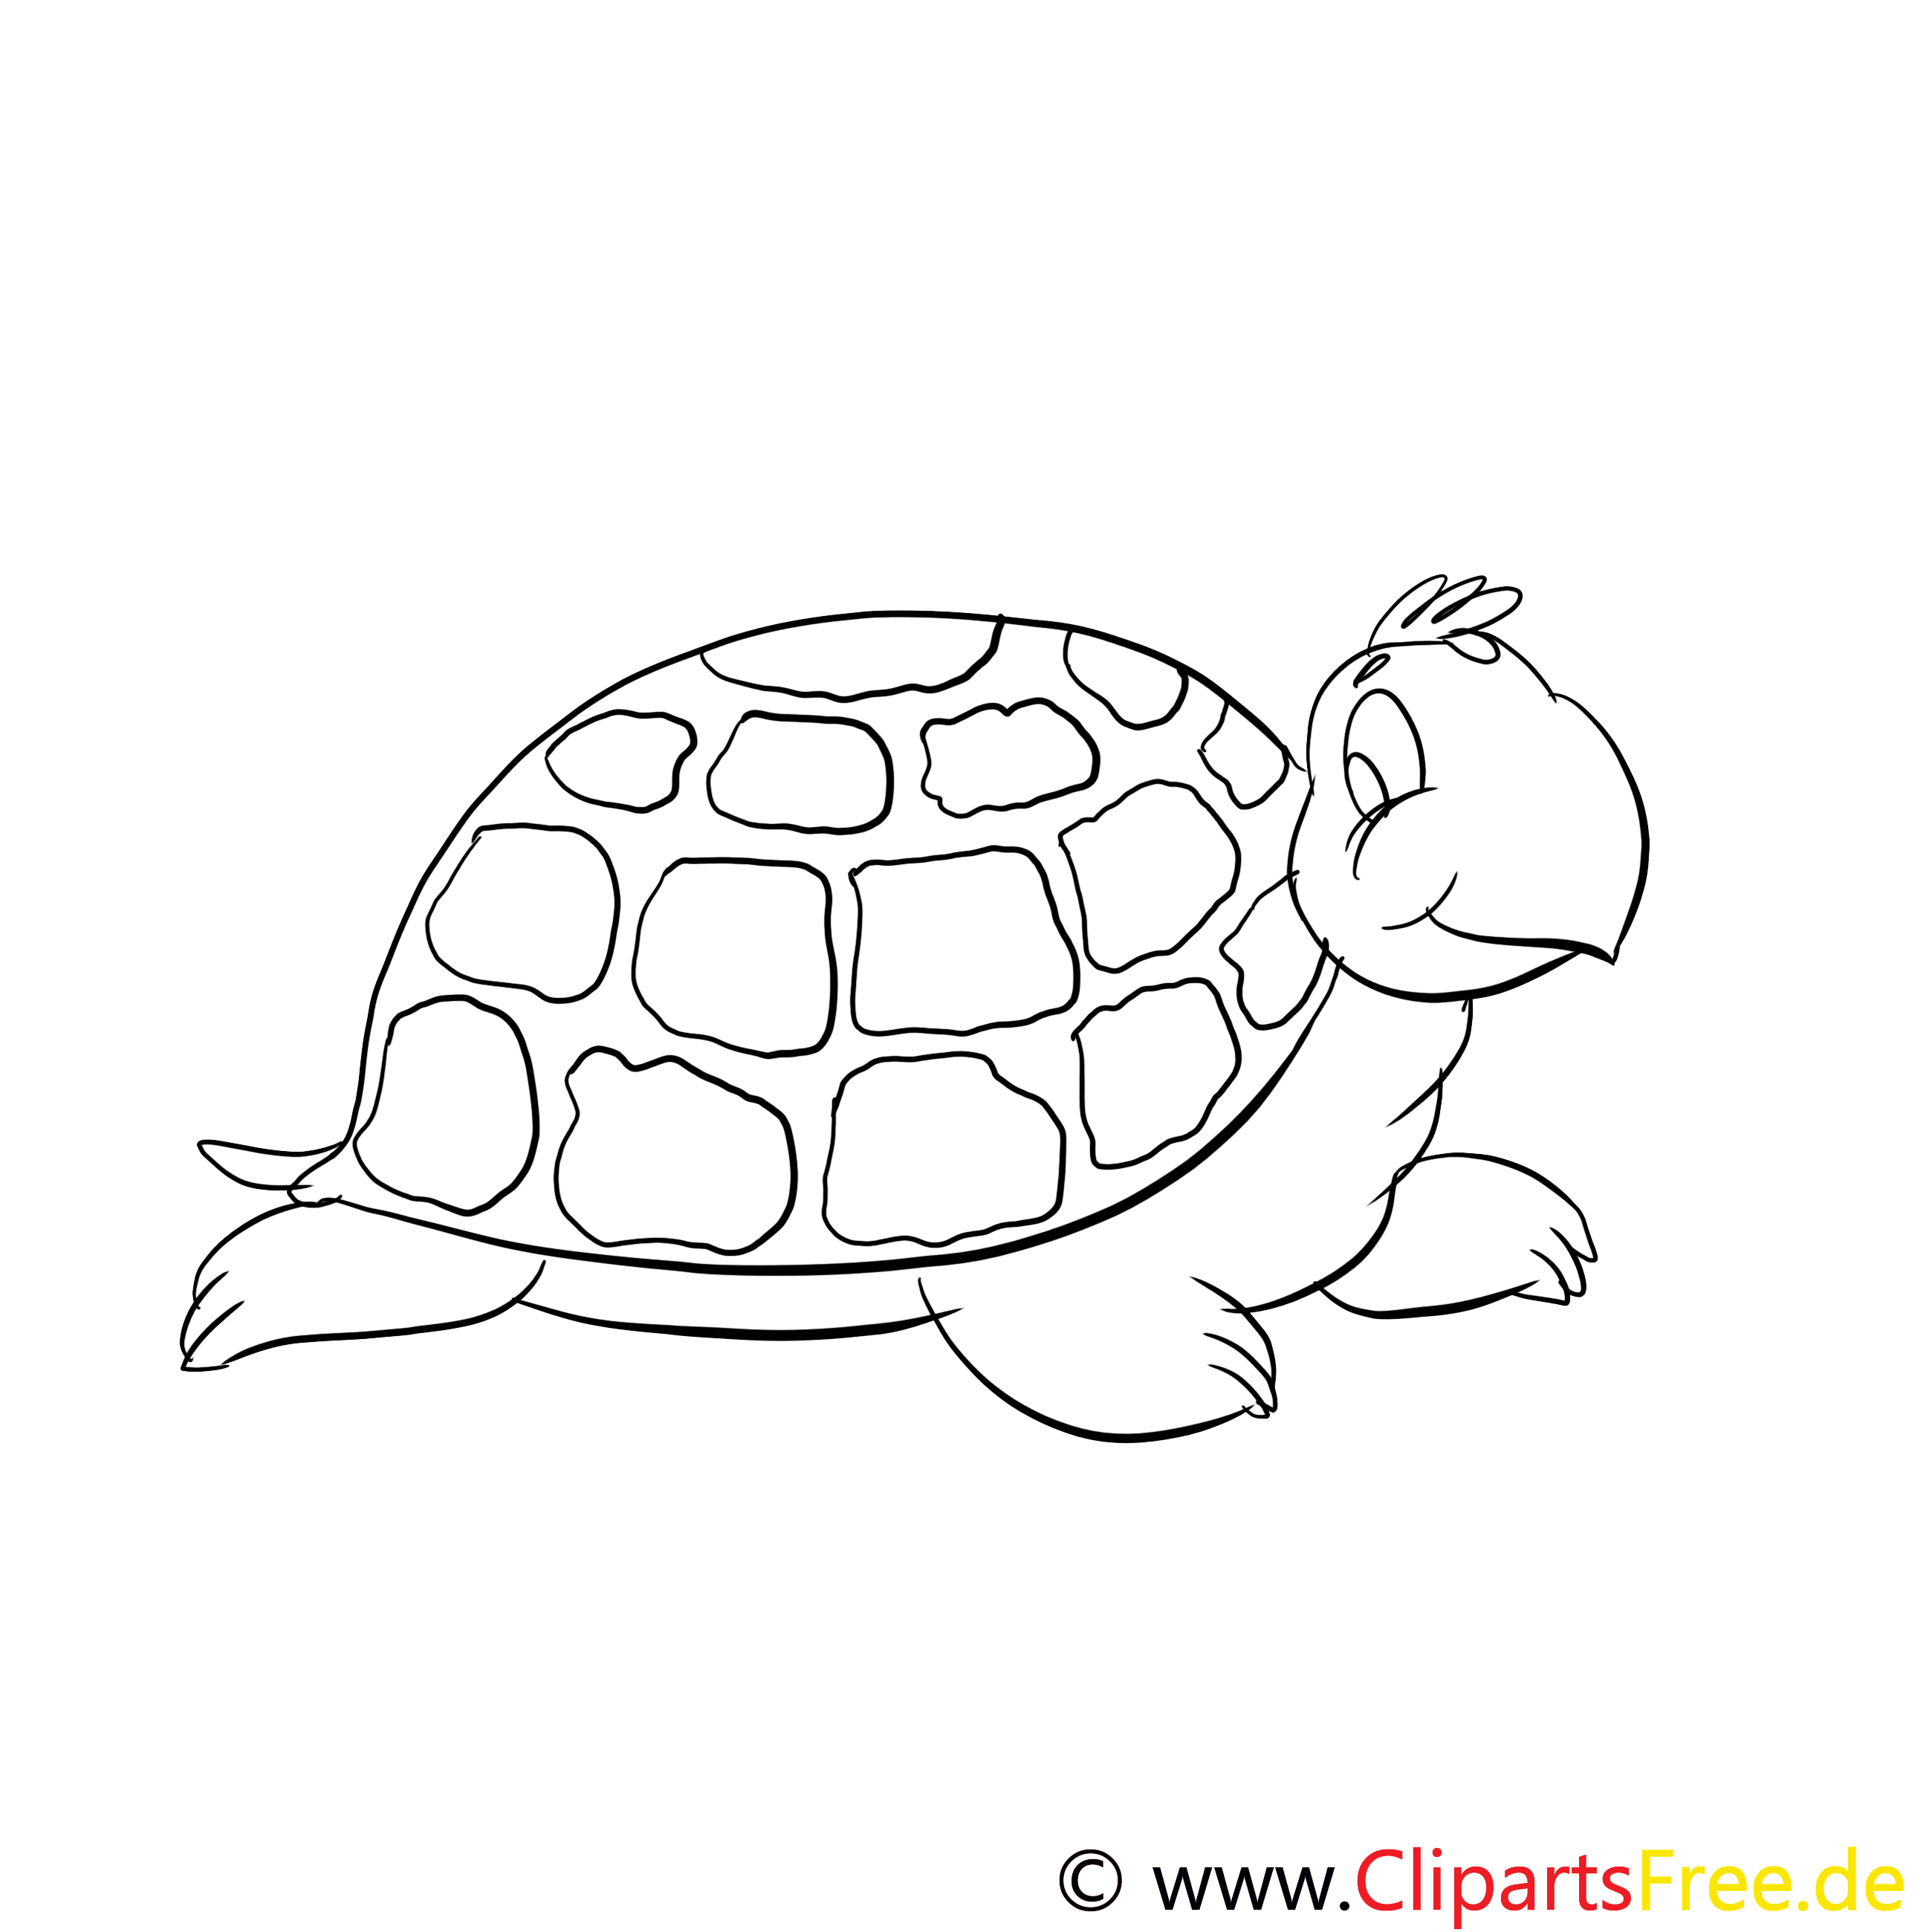 Мудрая черепаха раскраска для детей